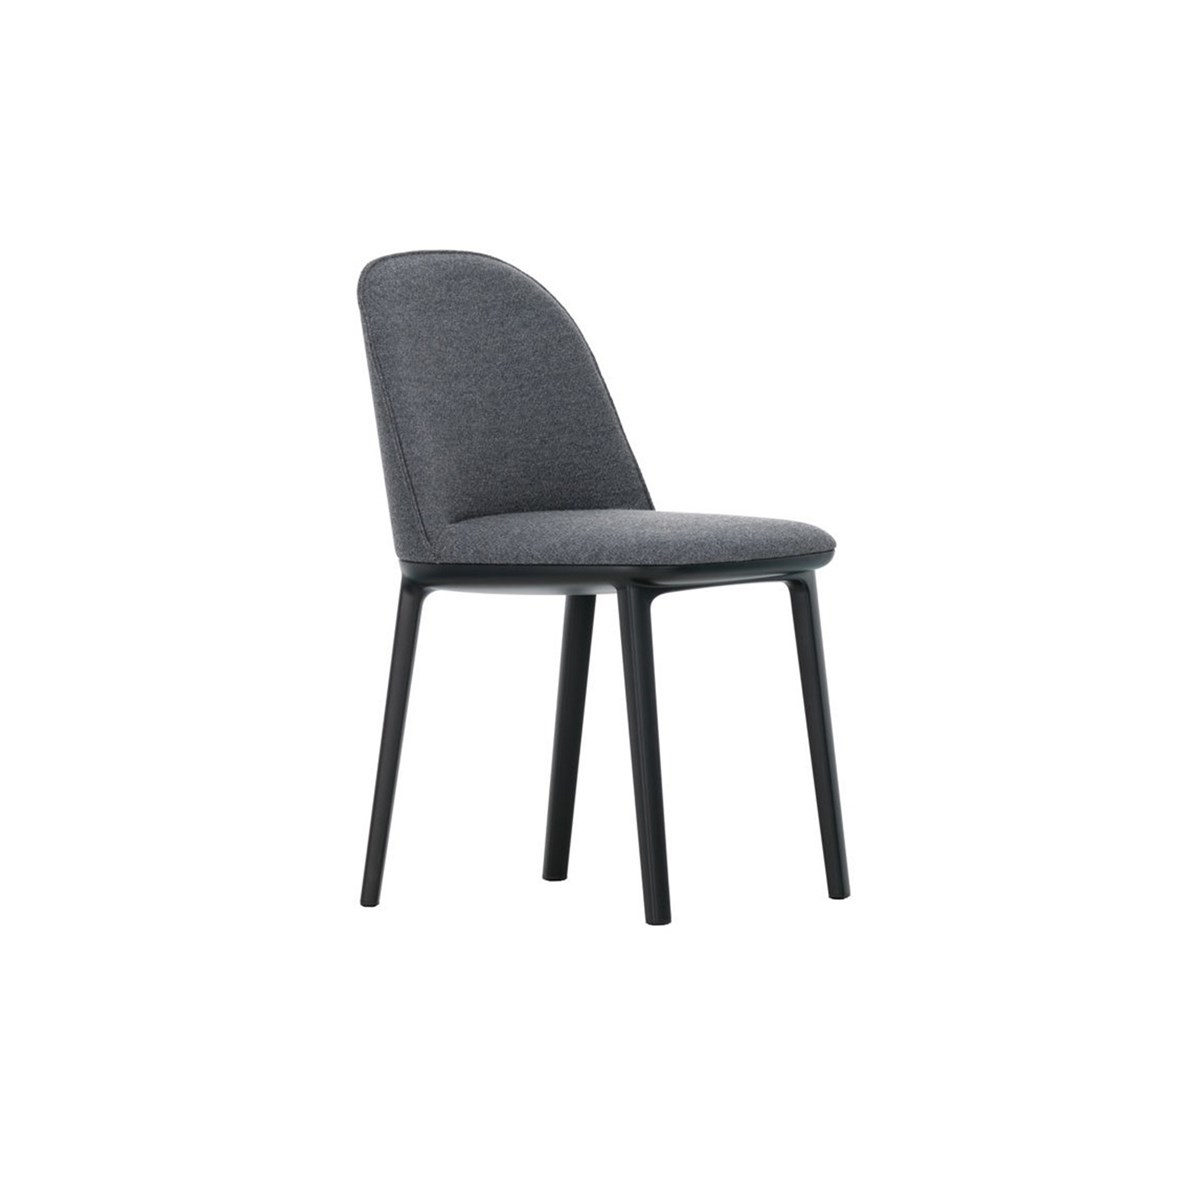 Vitra-Ronan-Erwan-Bouroullec-Softshell-Side-Chair-Matisse-1